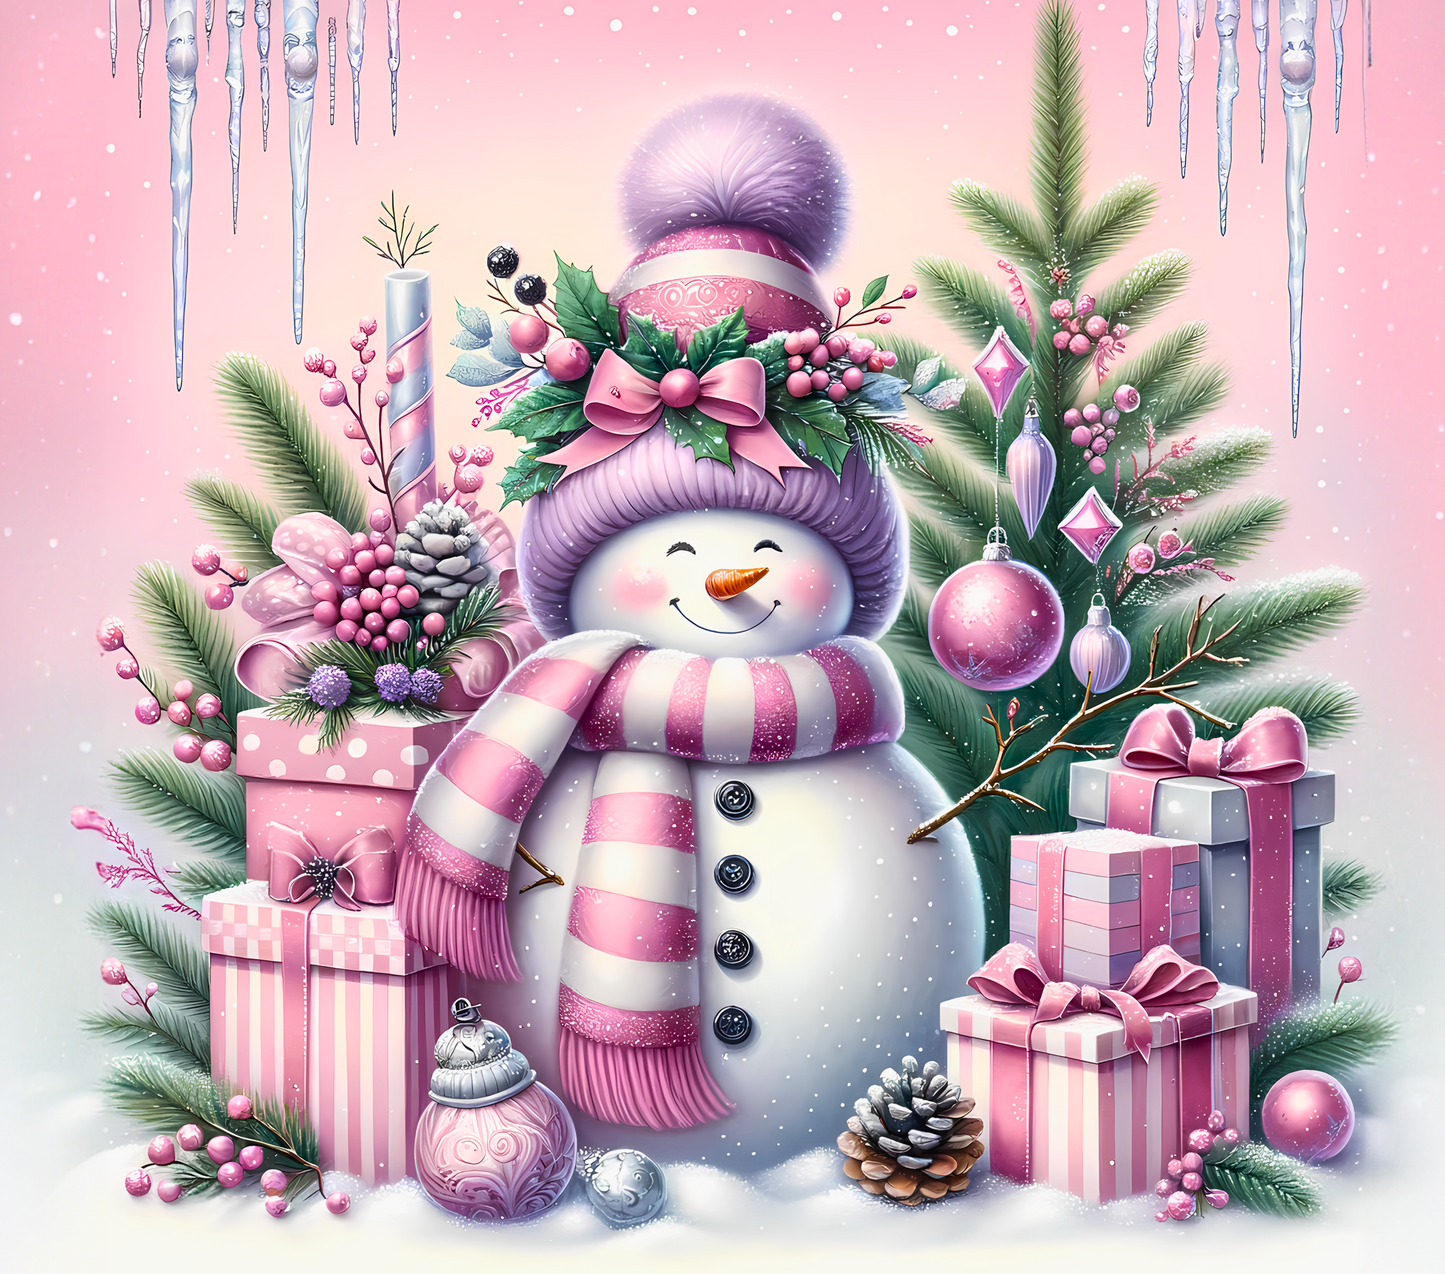 Snowman in pink